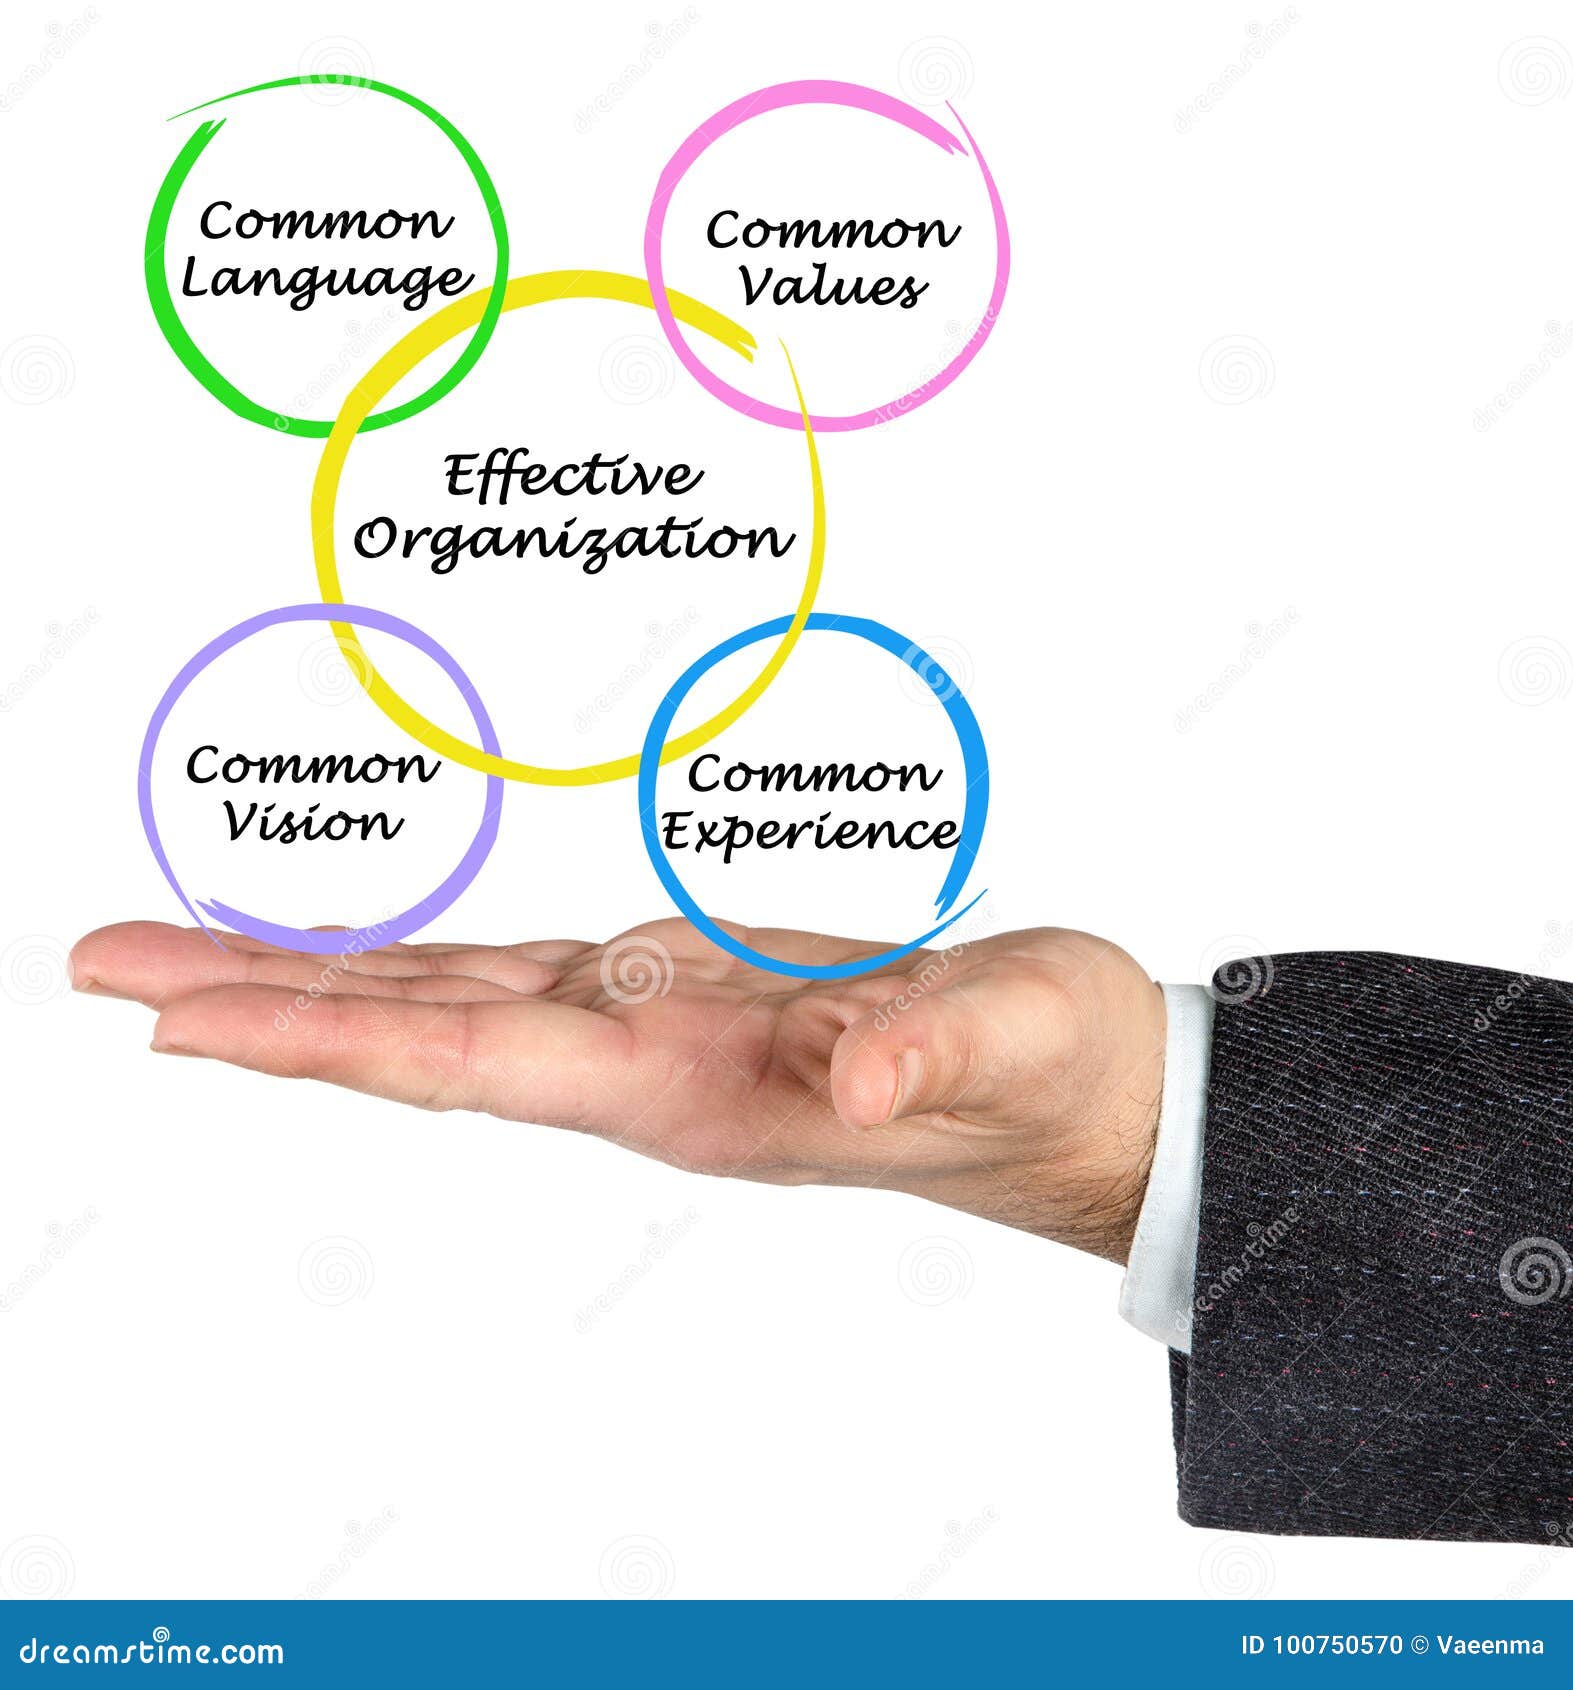 effective organizations